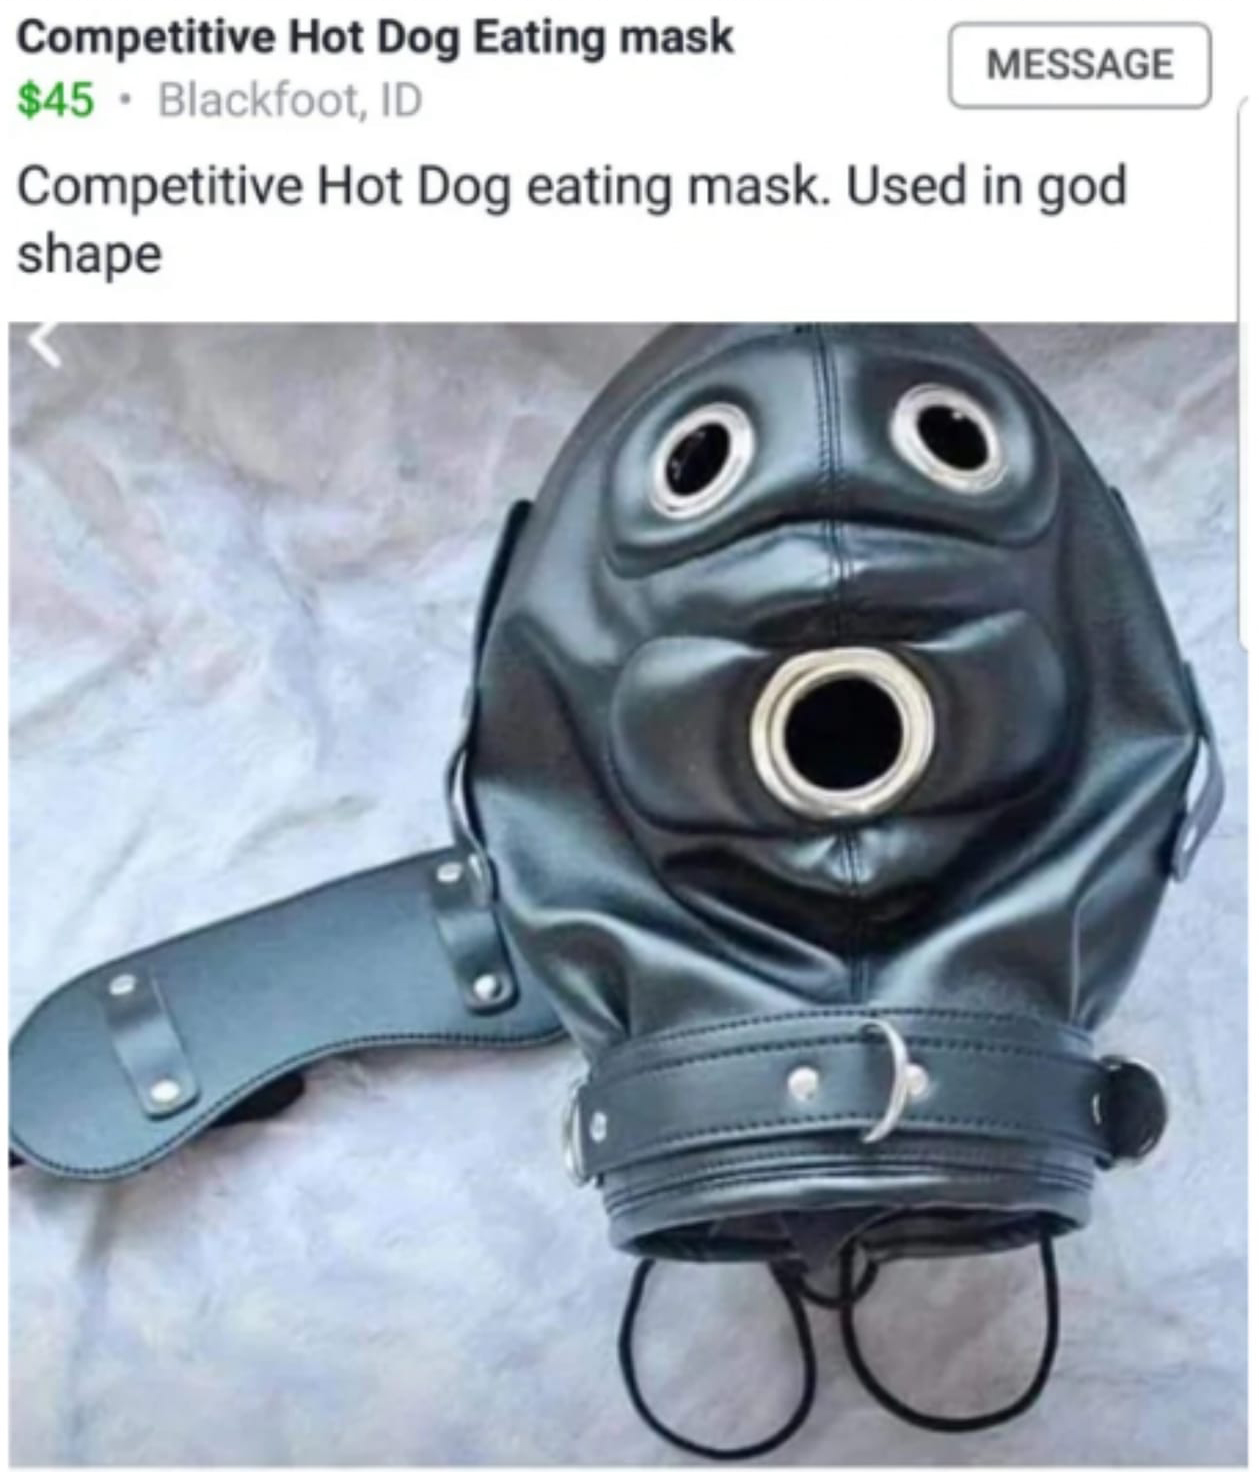 competitive hot dog eating mask - Competitive Hot Dog Eating mask